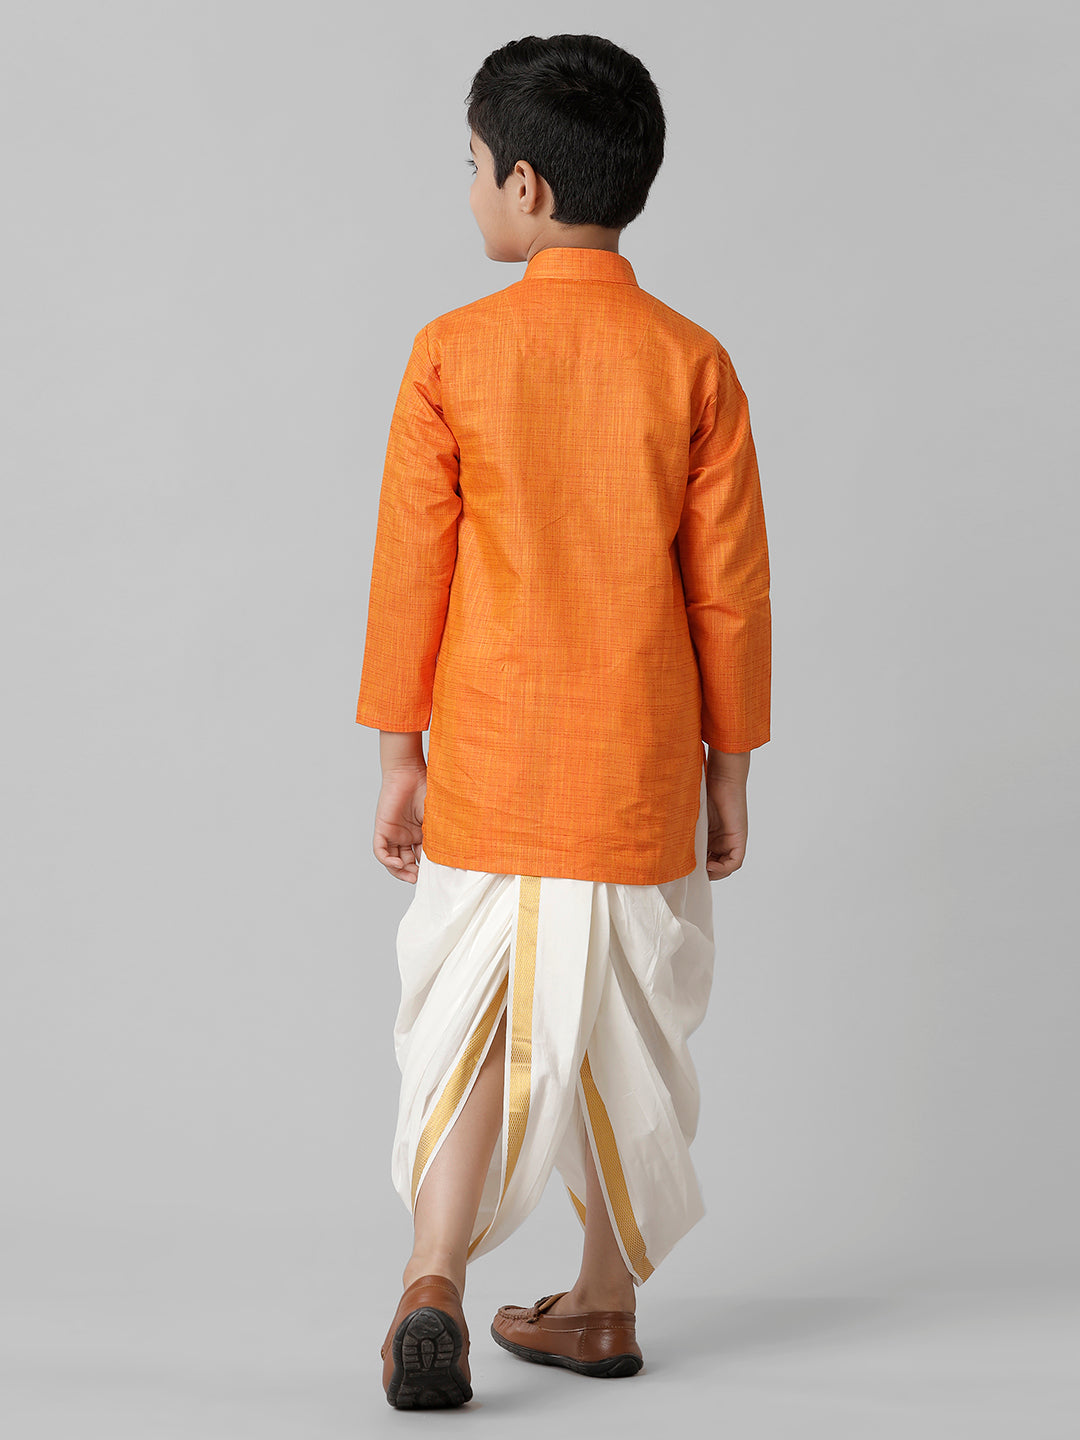 Boys Cotton Orange Kurta with Cream Elastic Panchakacham Towel Combo FS3-Back view